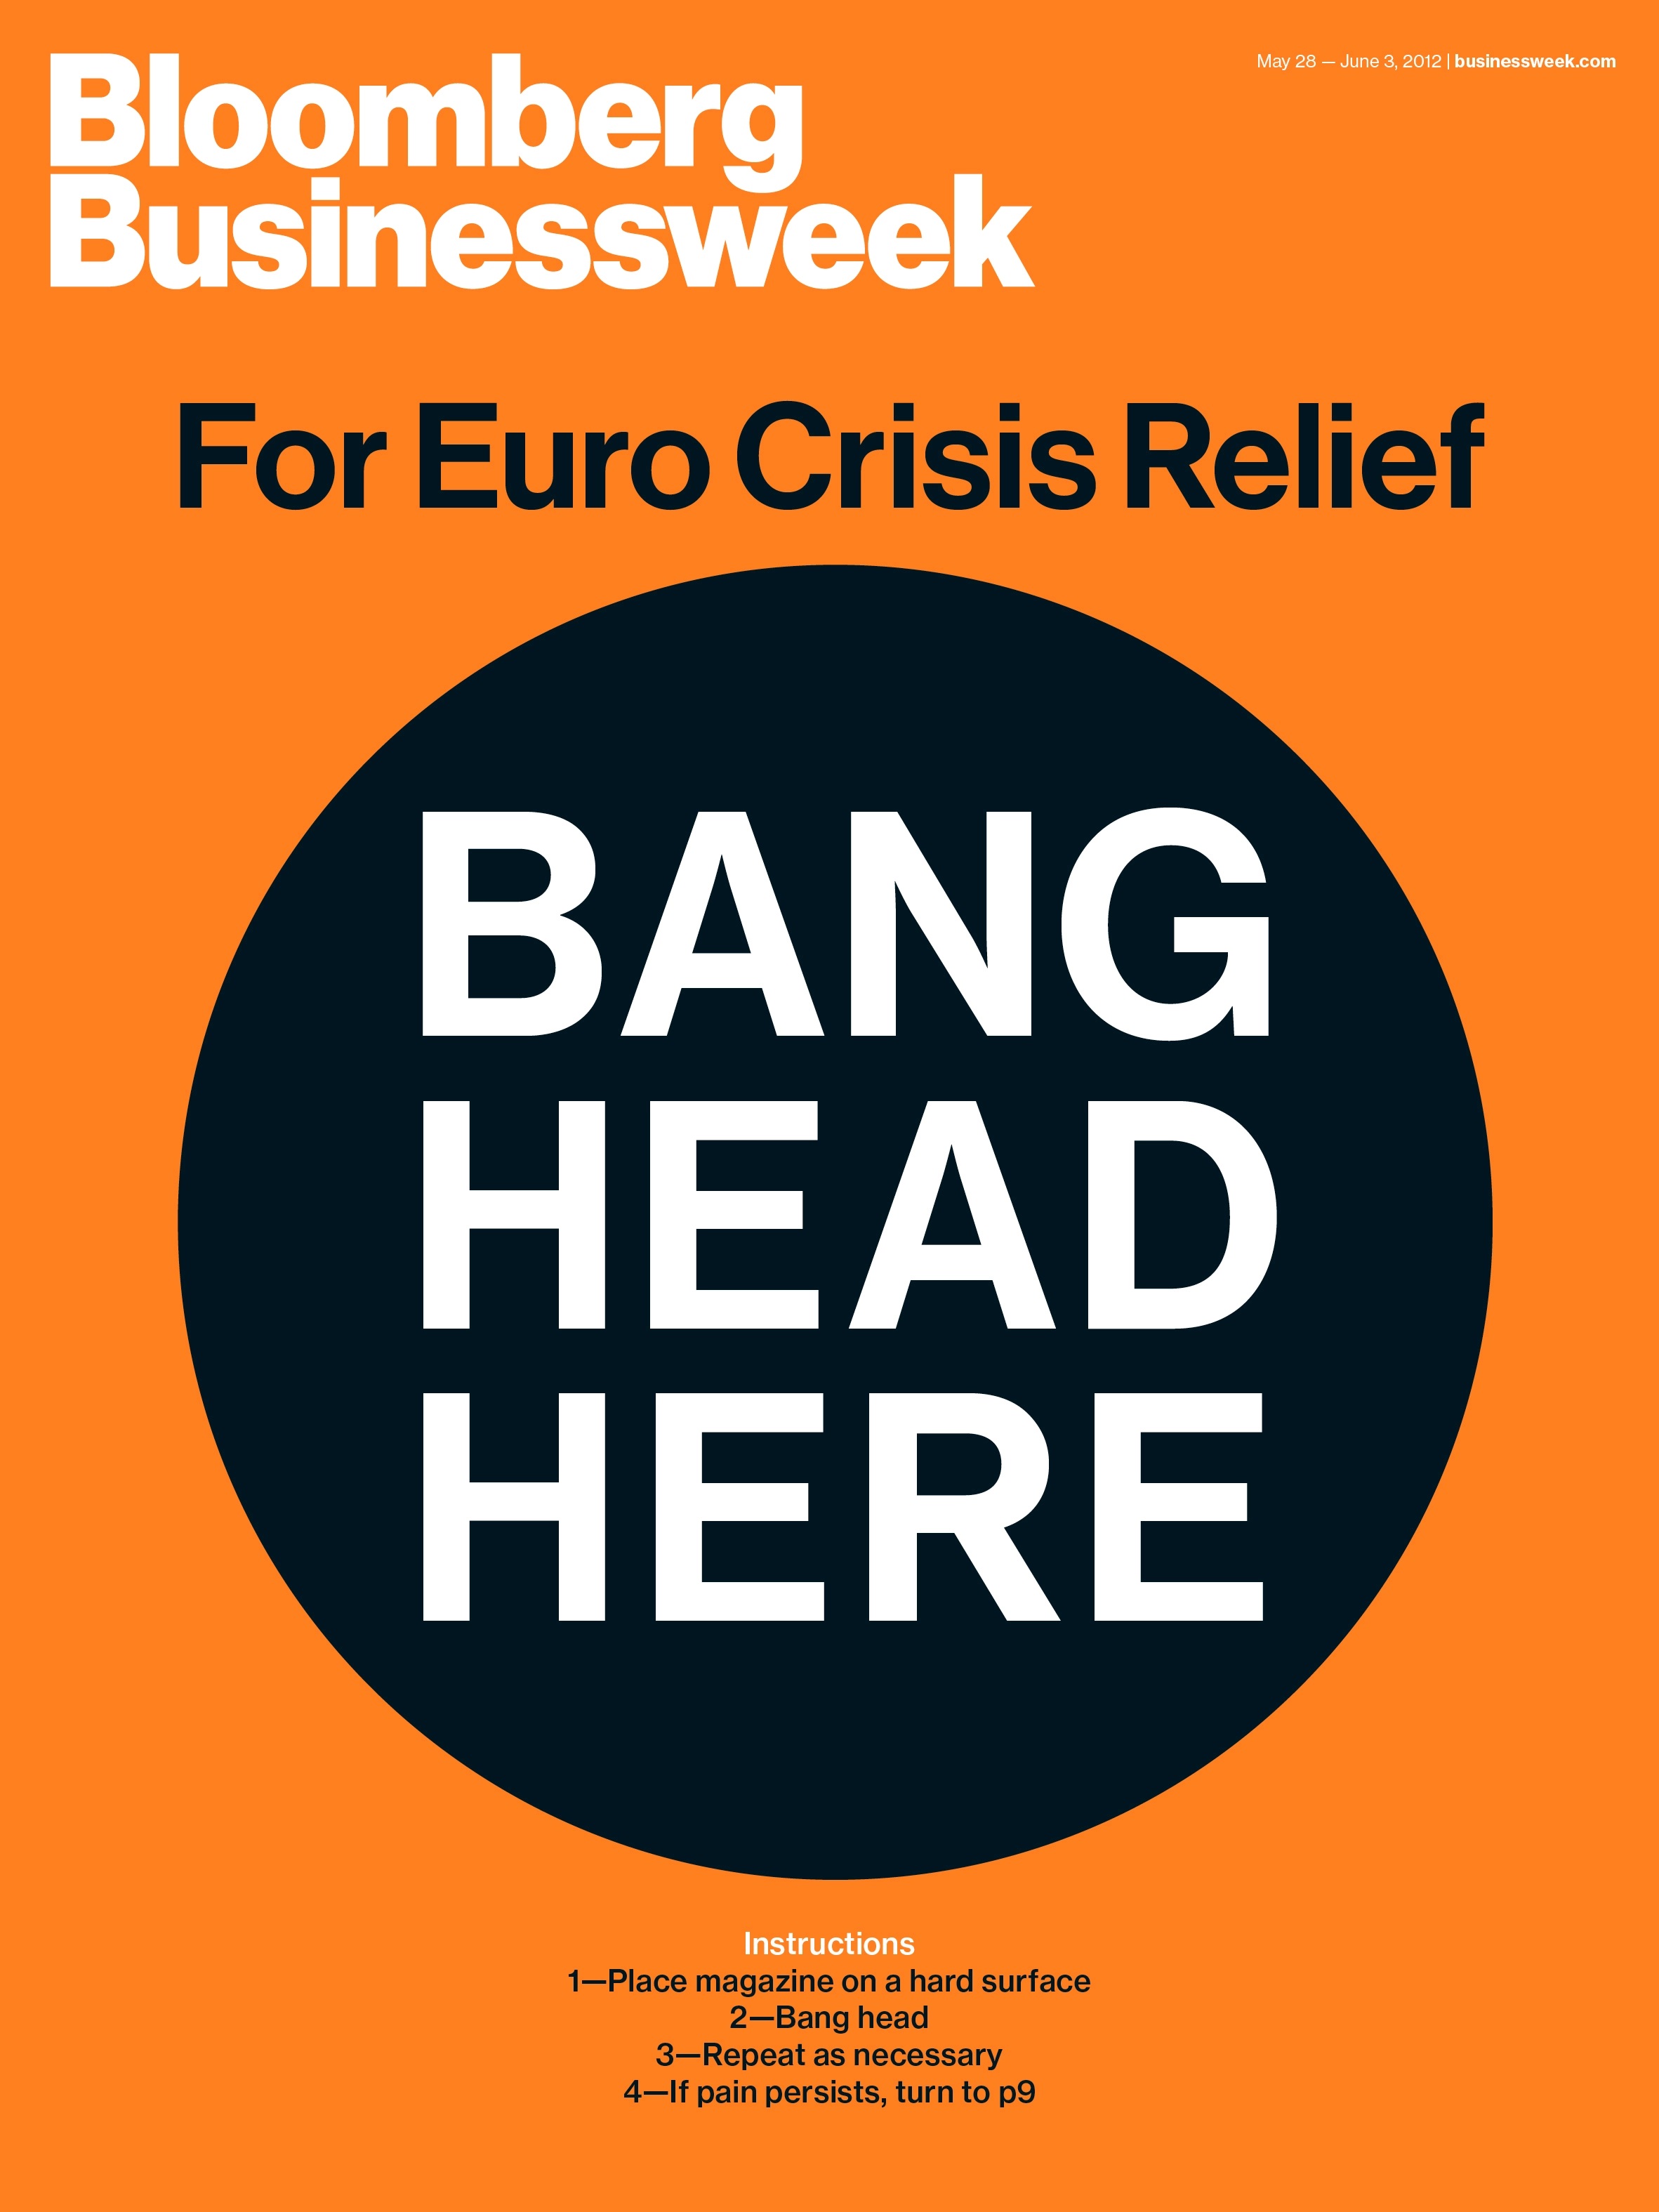 Bloomberg Businessweek-May 28–June 3, 2012: "Bang Head Here"